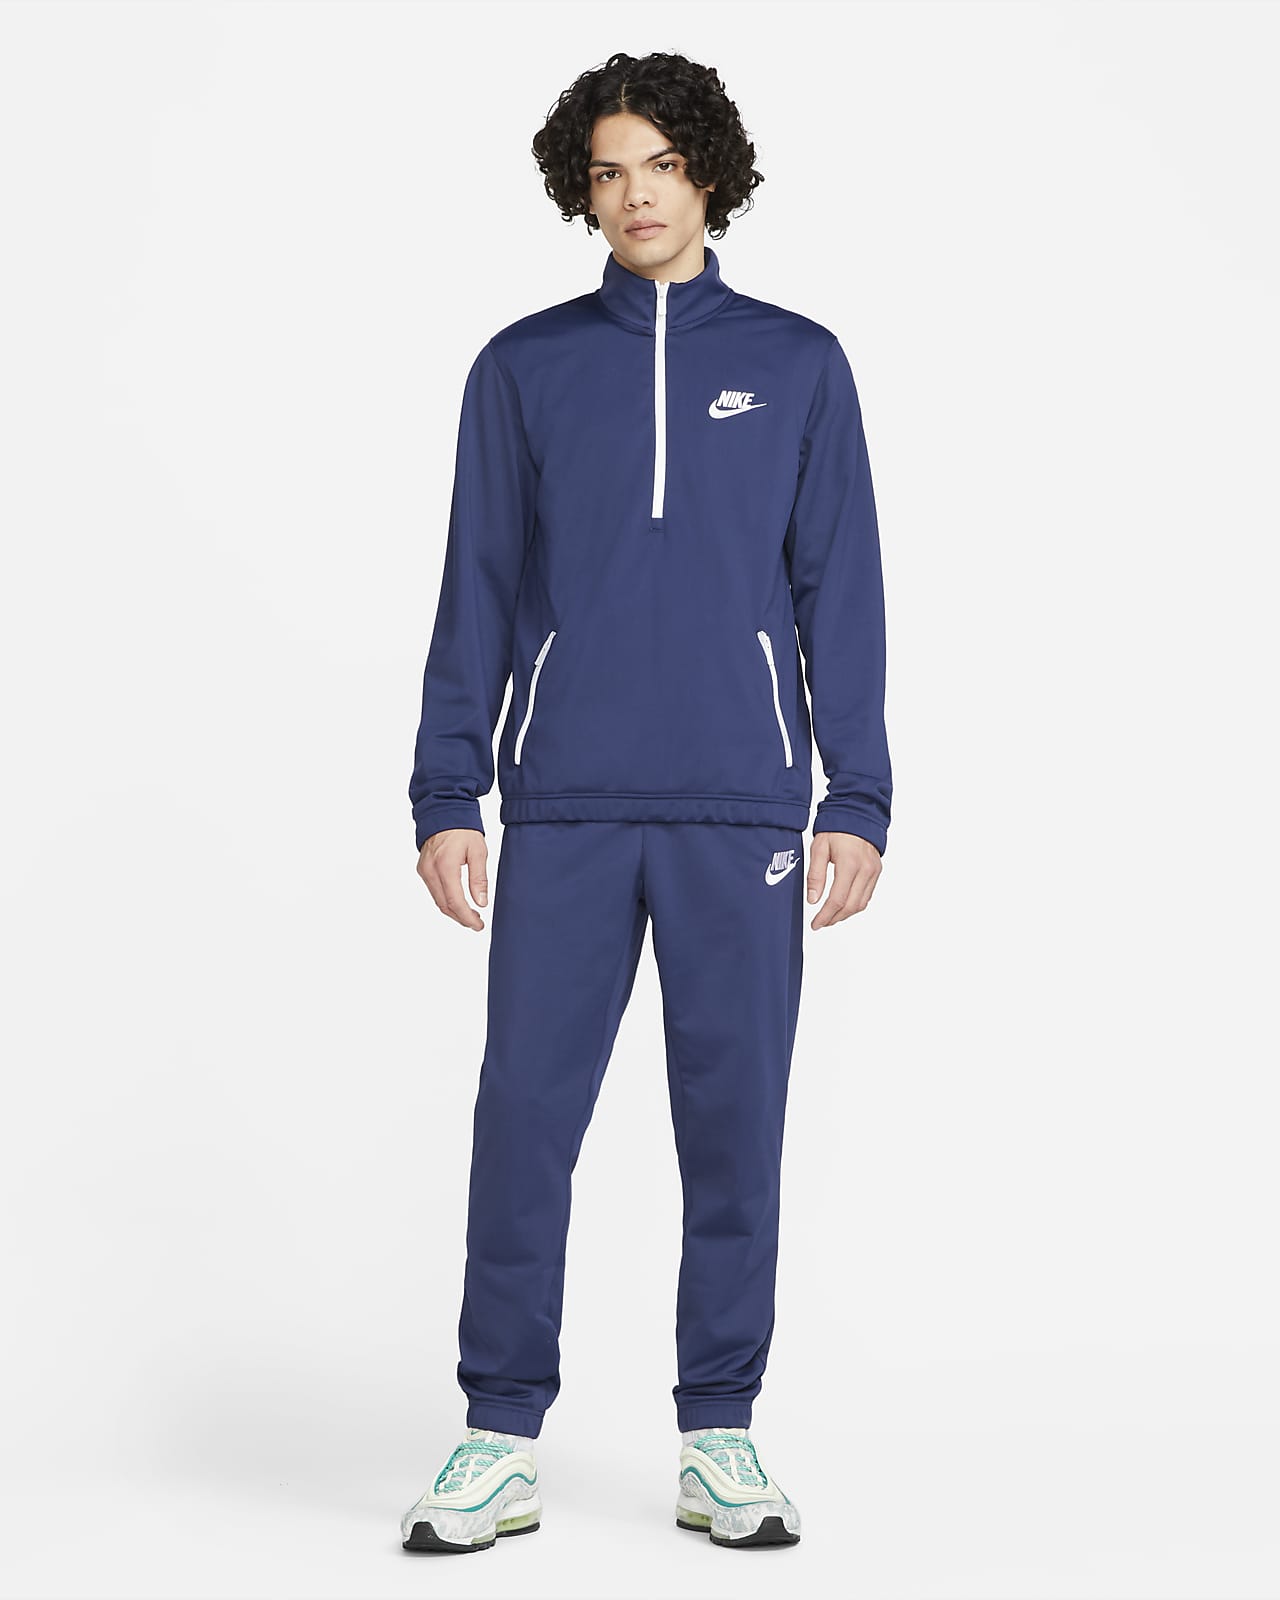 Veste Nike Track Junior vêtement running homme - XL Bleu marine